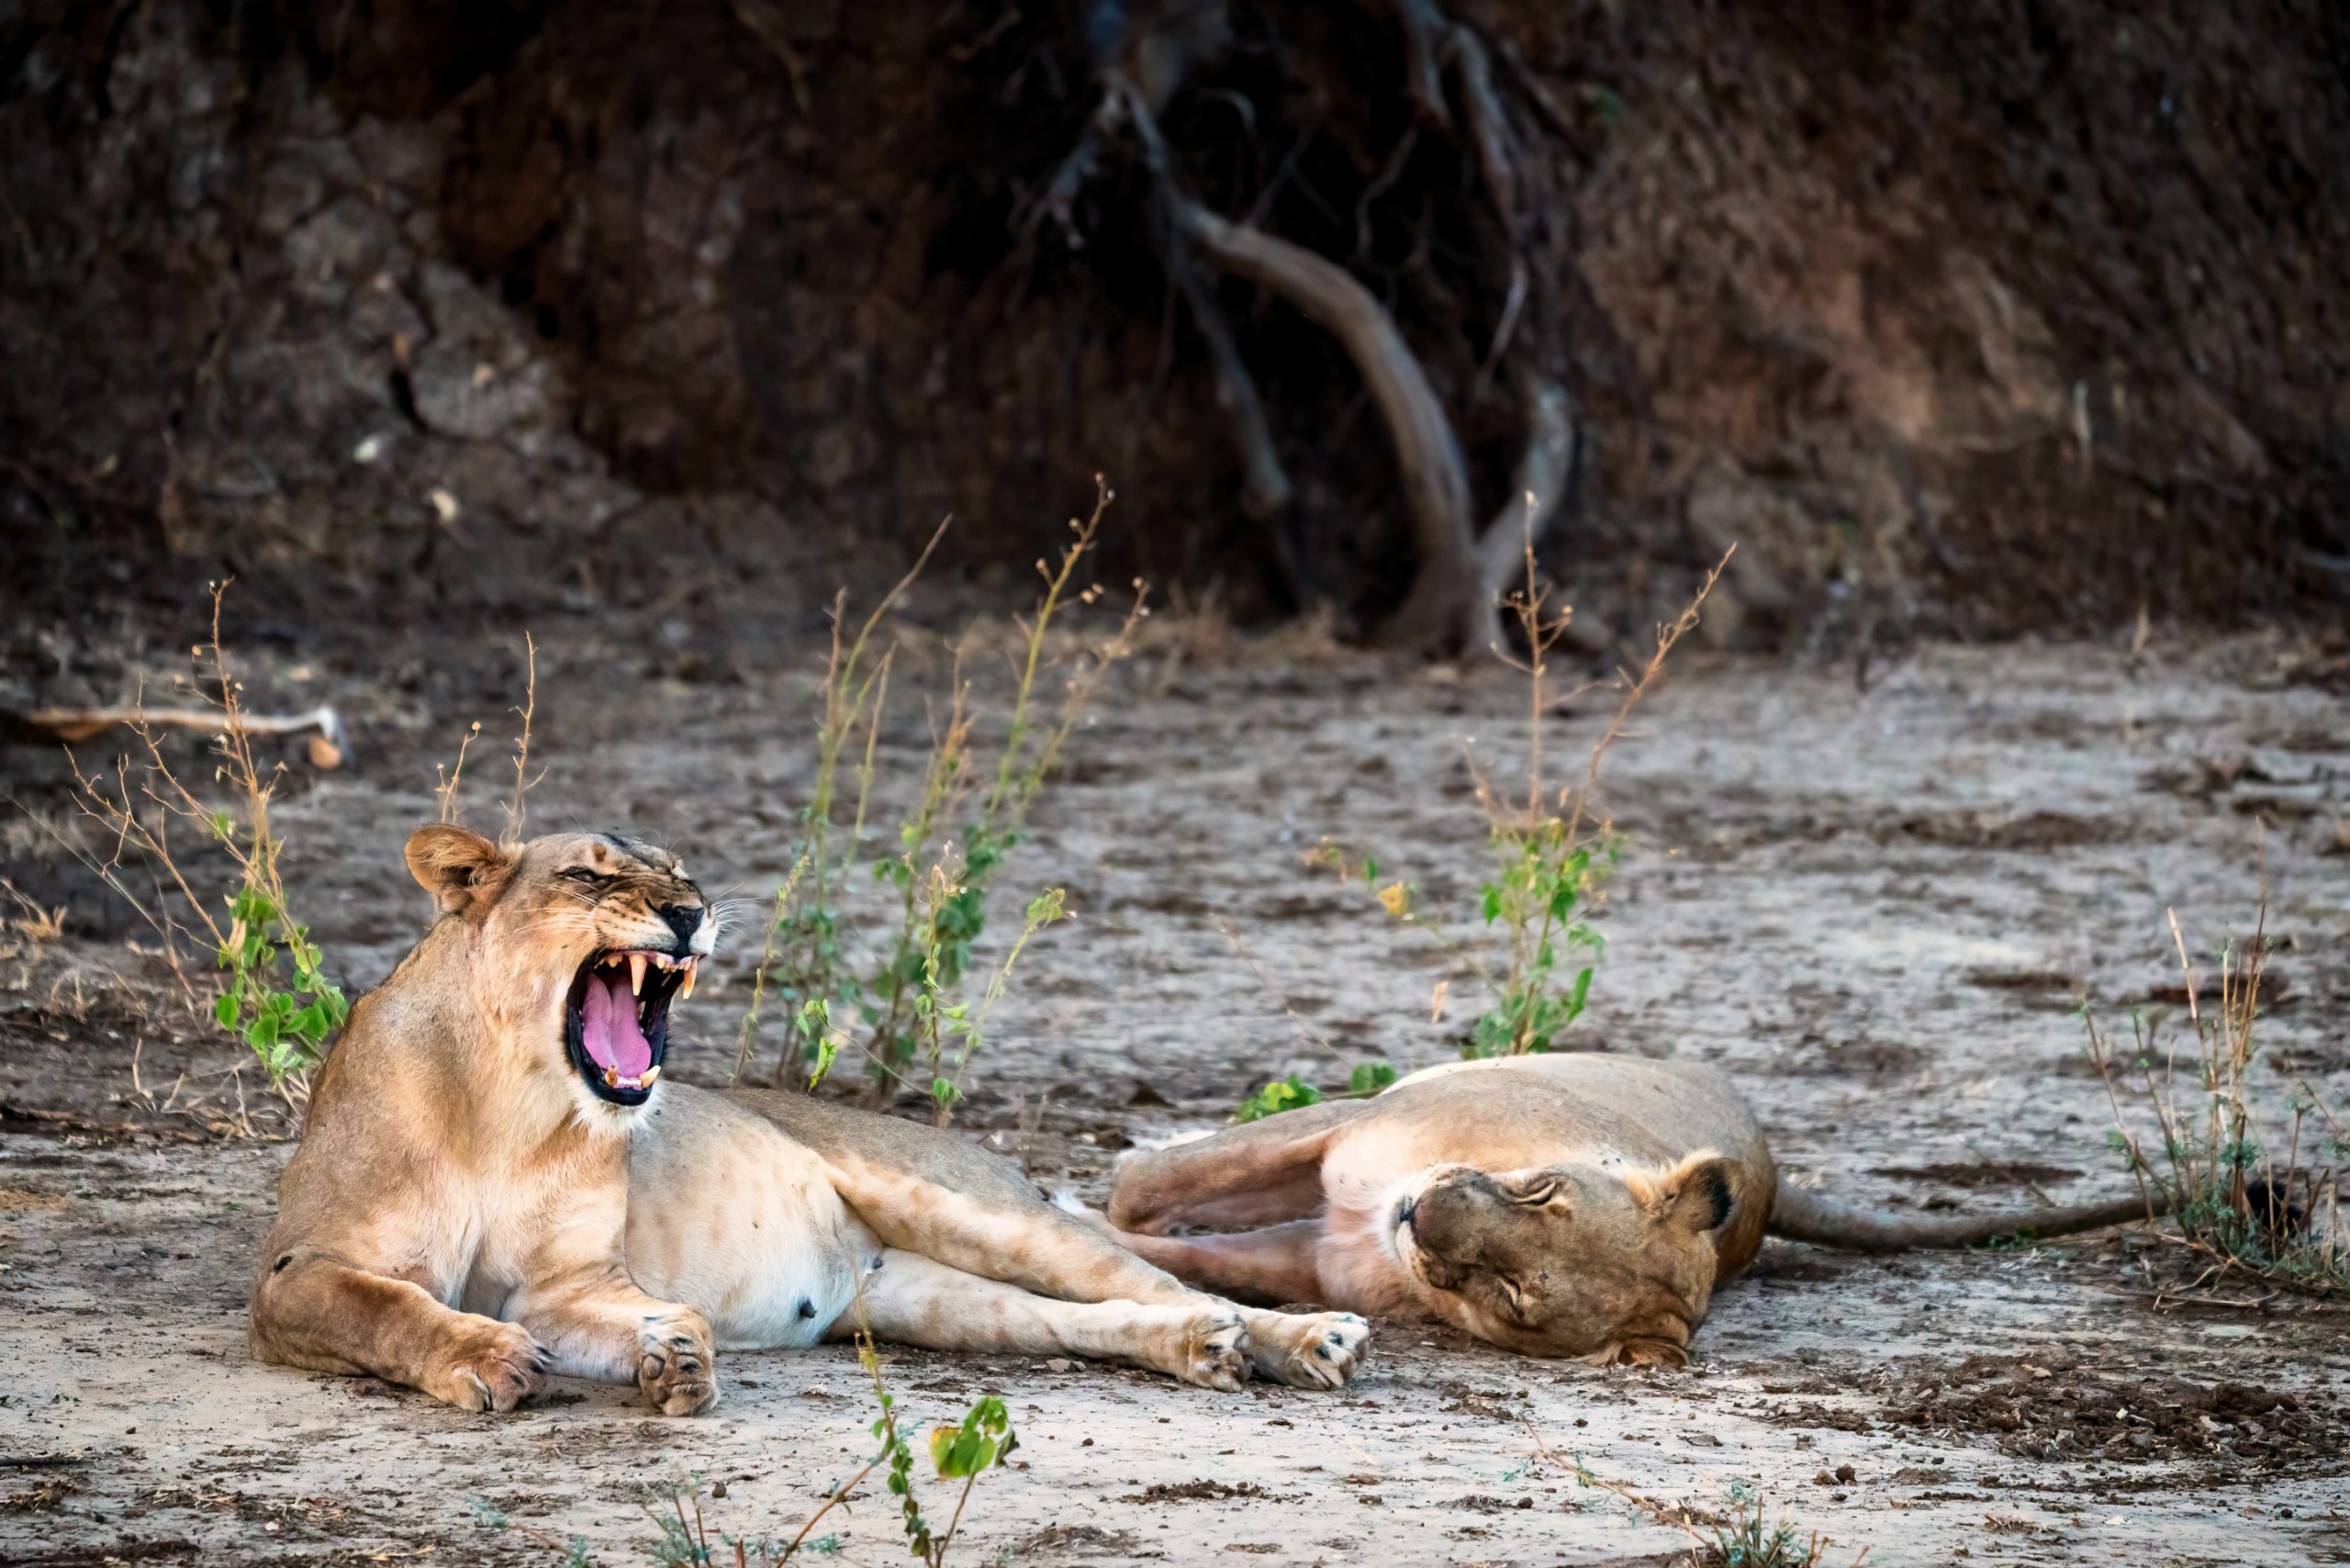 Growling lioness in Lower Zambezi National Park in Zambia.